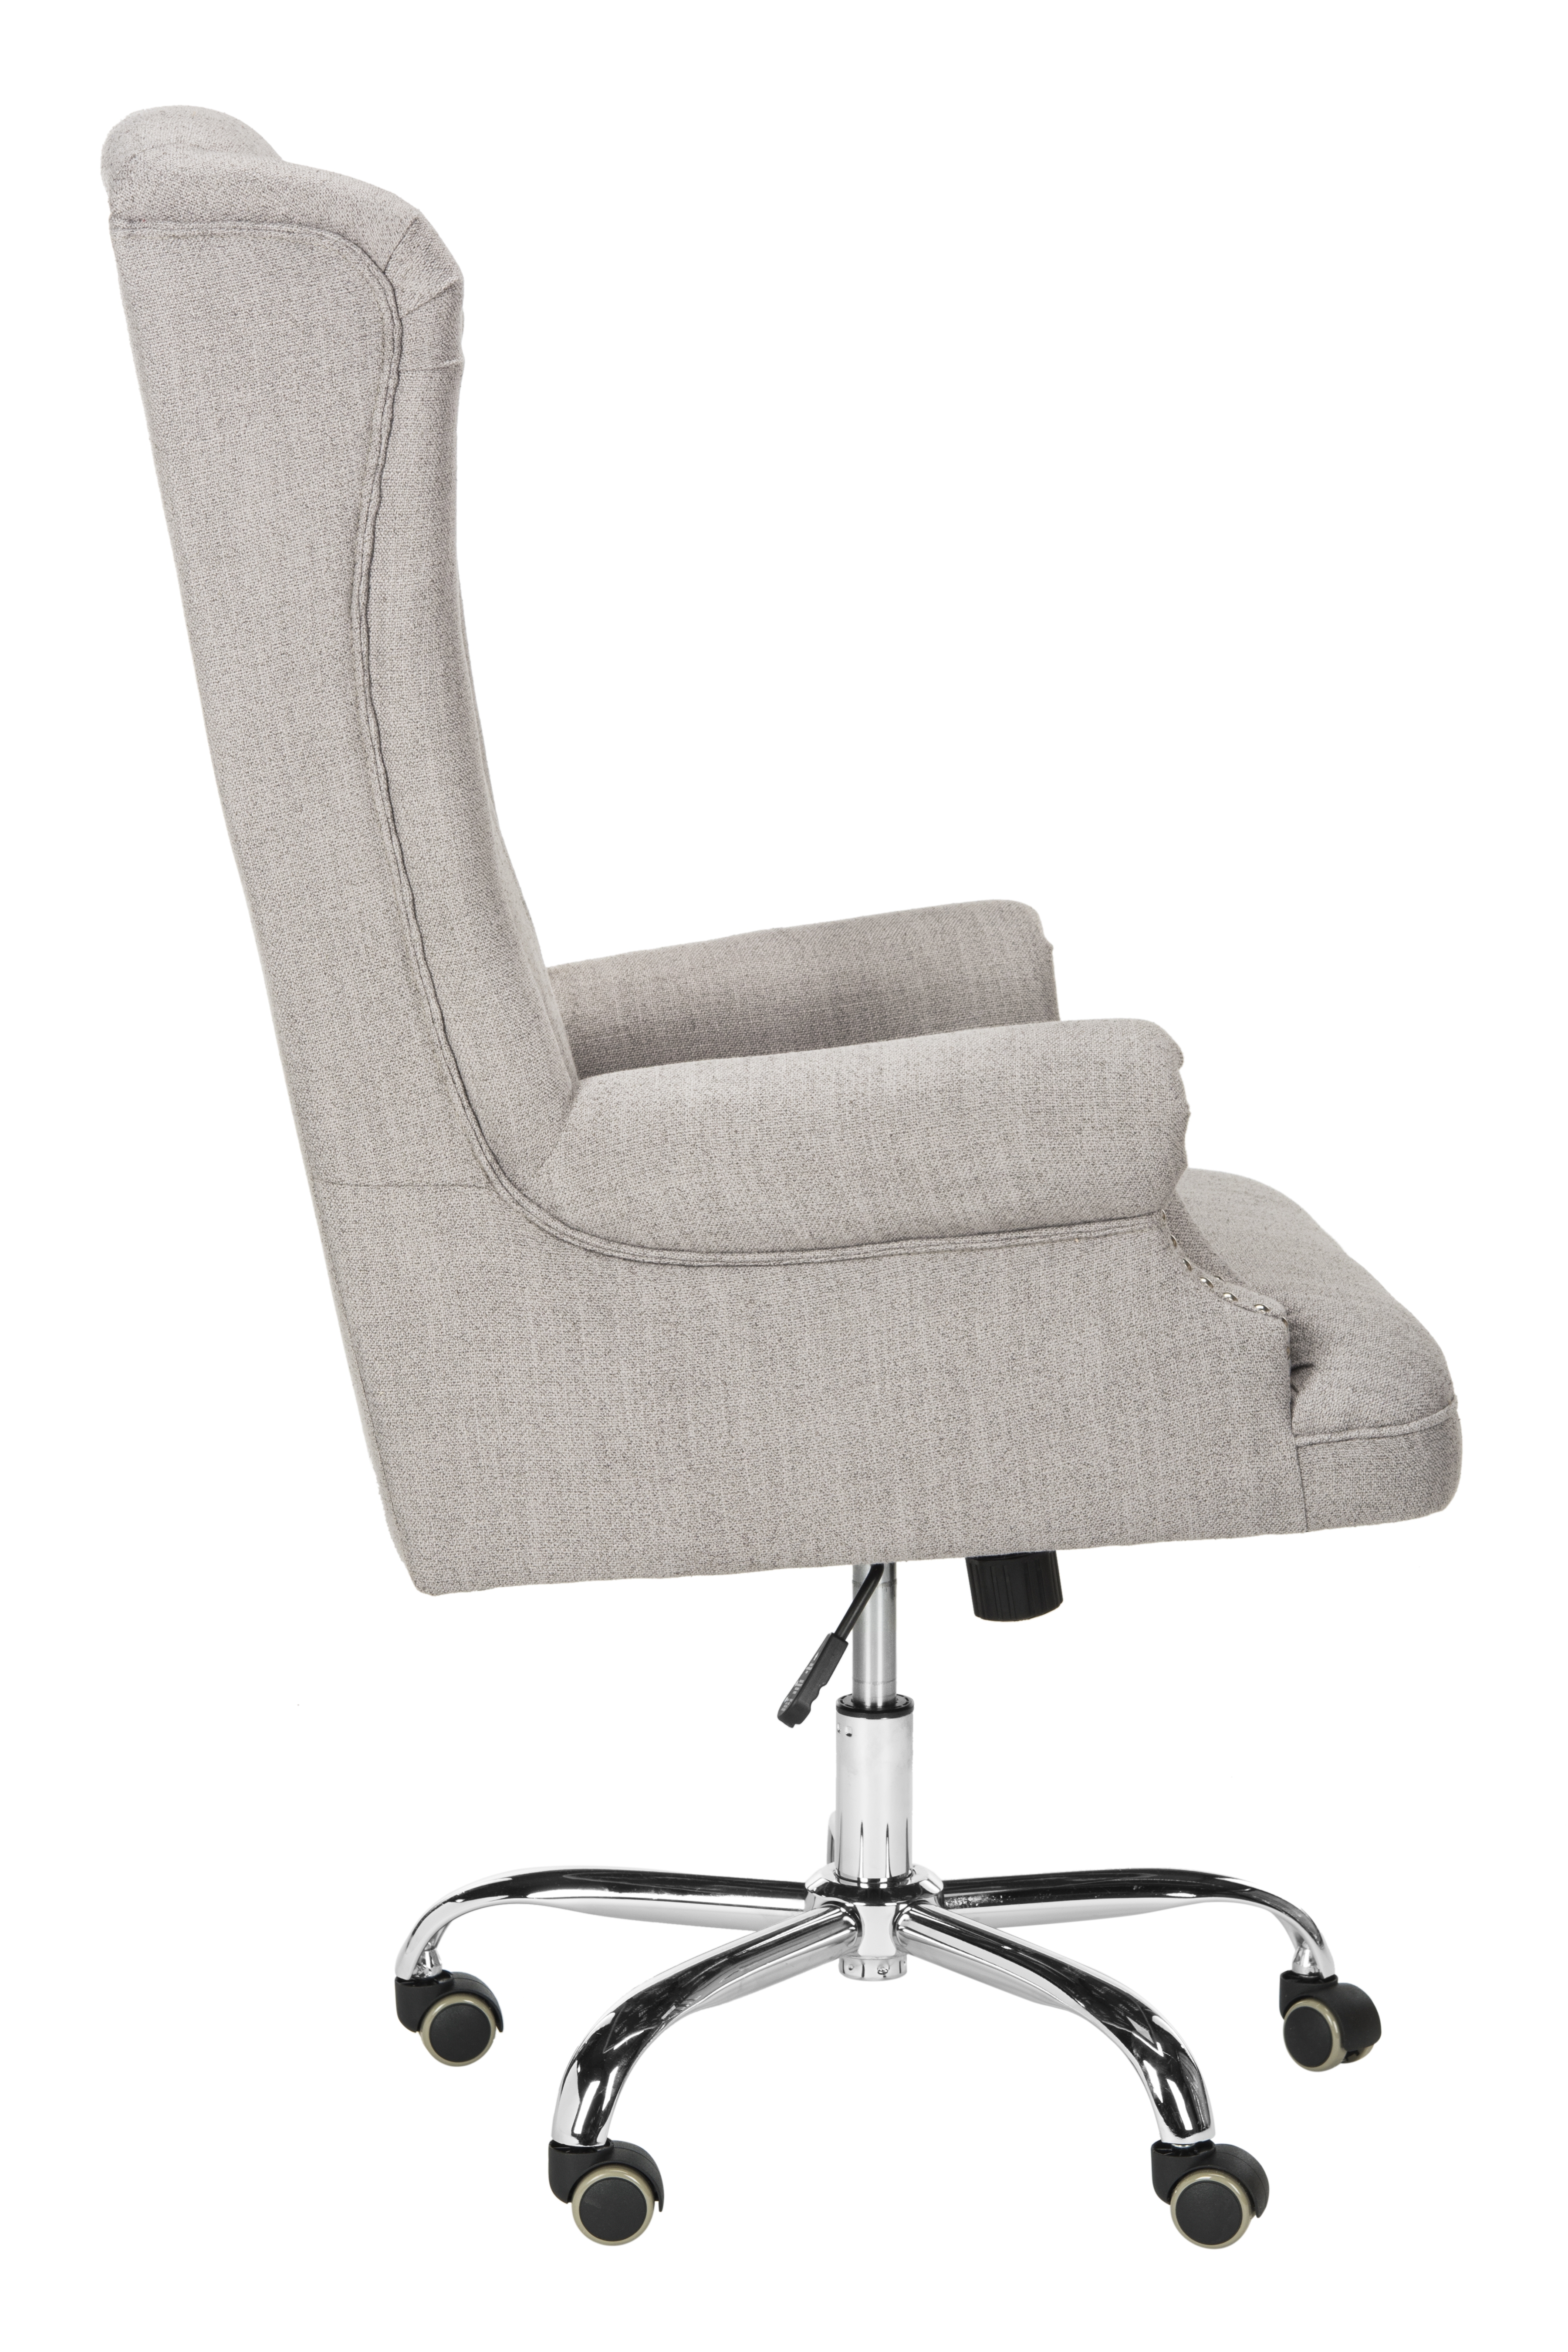 Ian Linen Chrome Leg Swivel Office Chair - Grey/Chrome - Arlo Home - Image 2